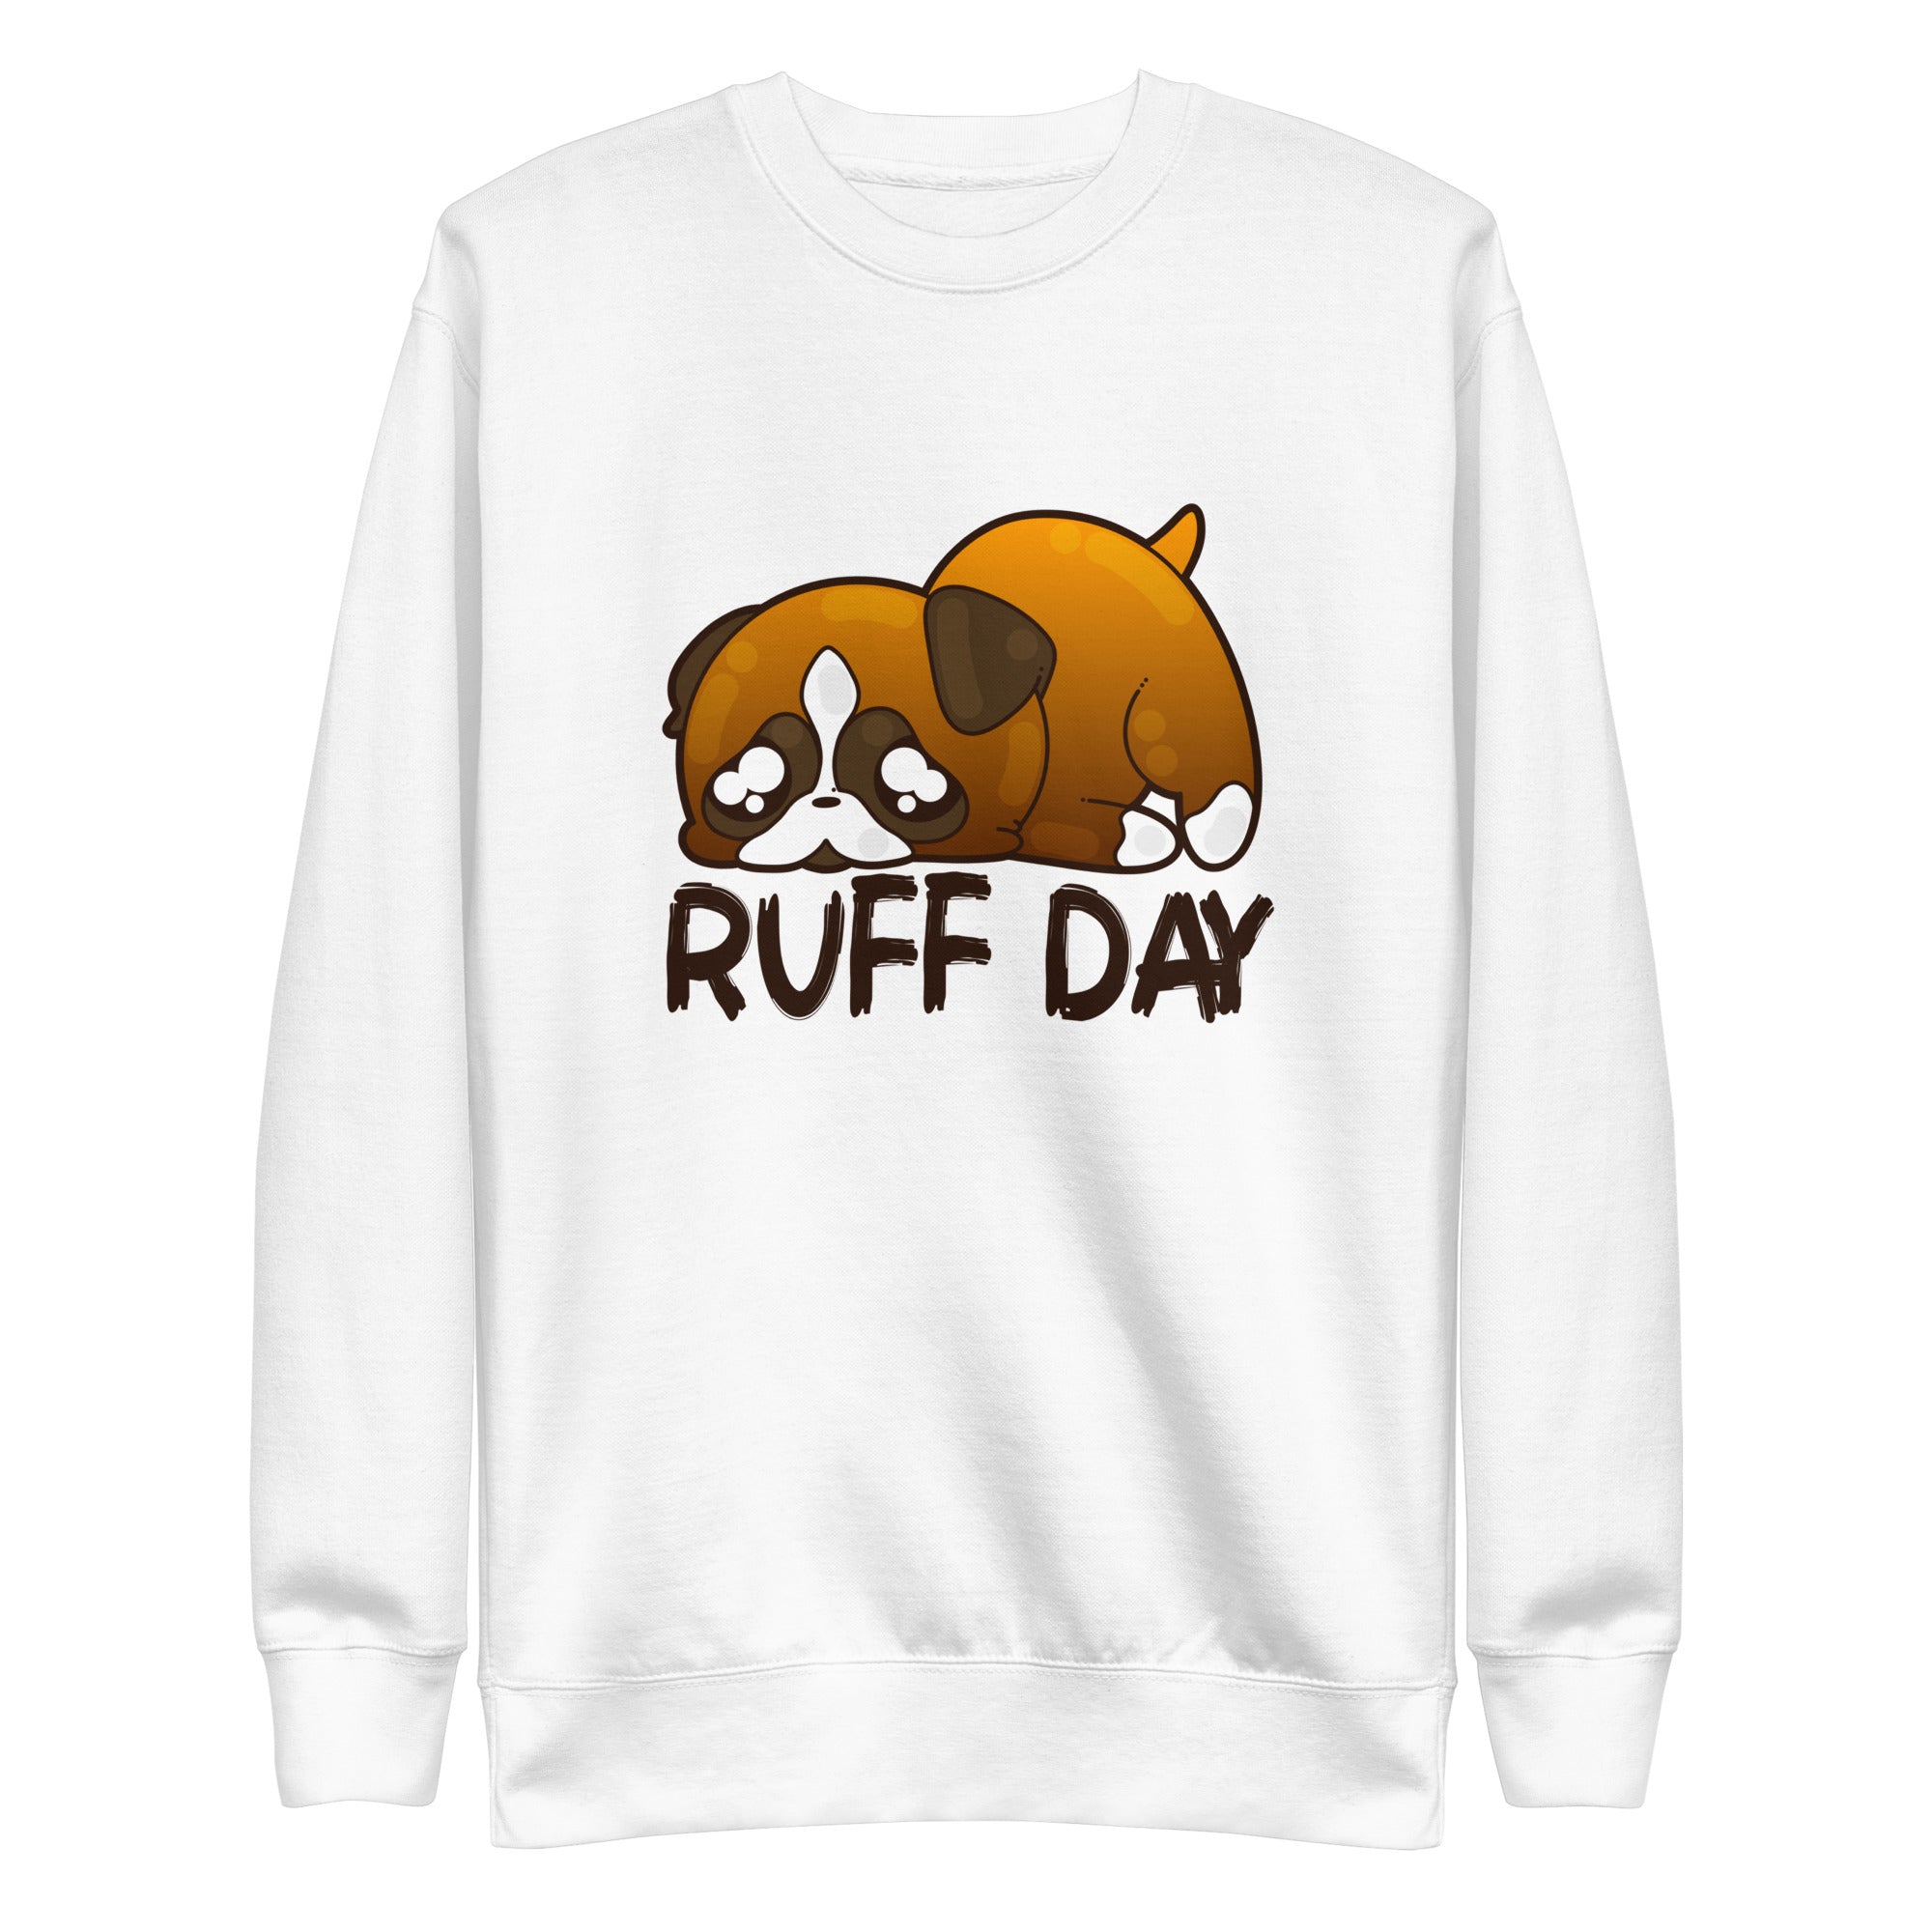 RUFF DAY - Sweatshirt - ChubbleGumLLC